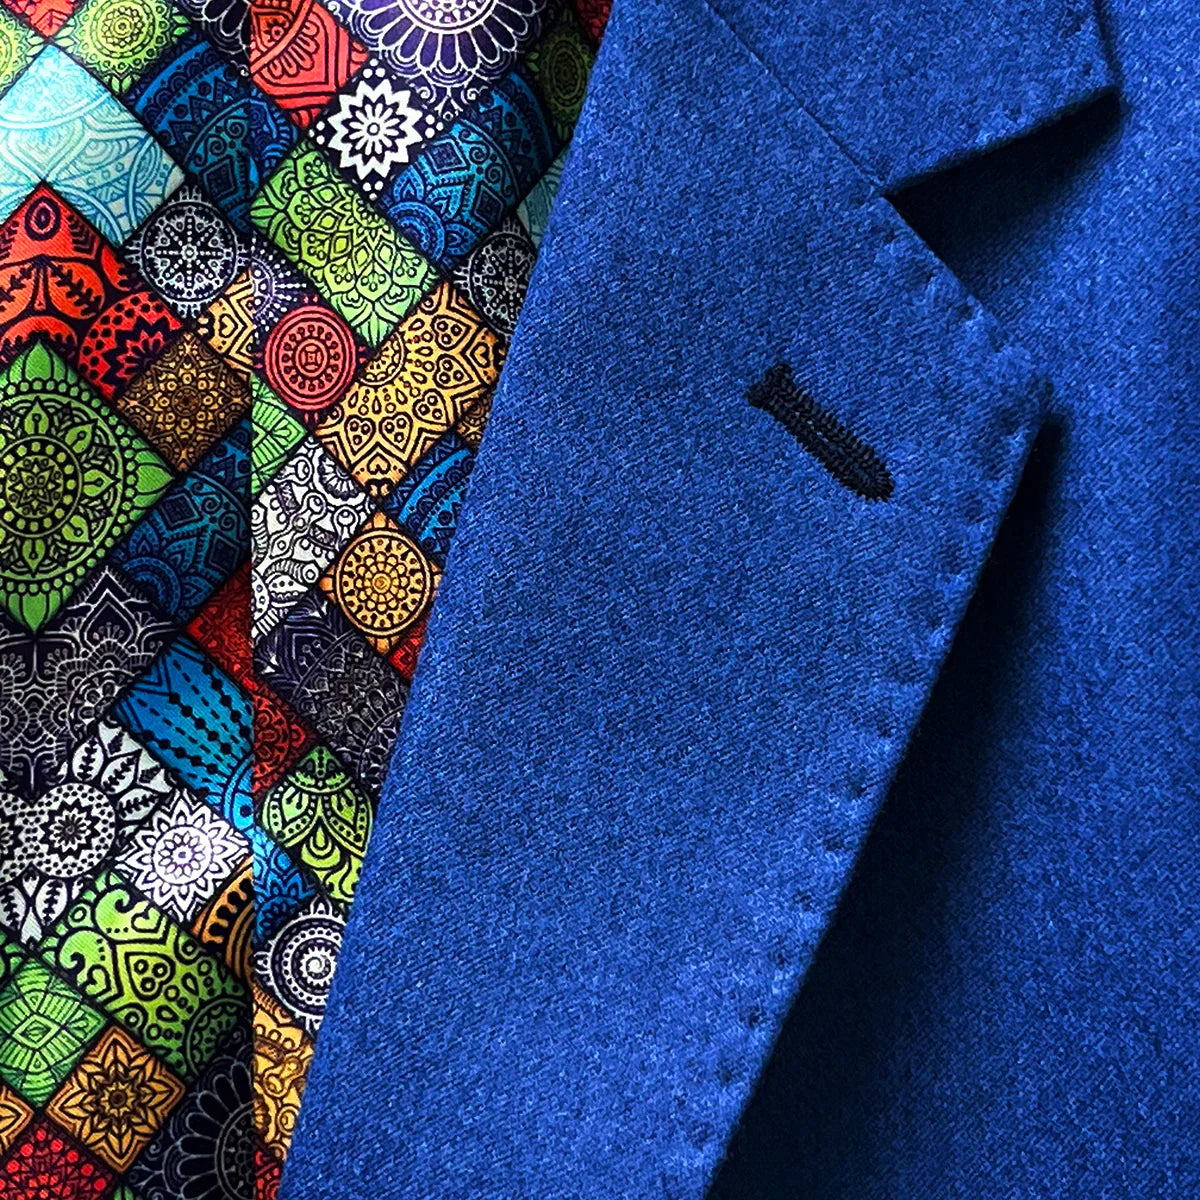 Notch lapel design on a light blue flannel sportcoat for men.